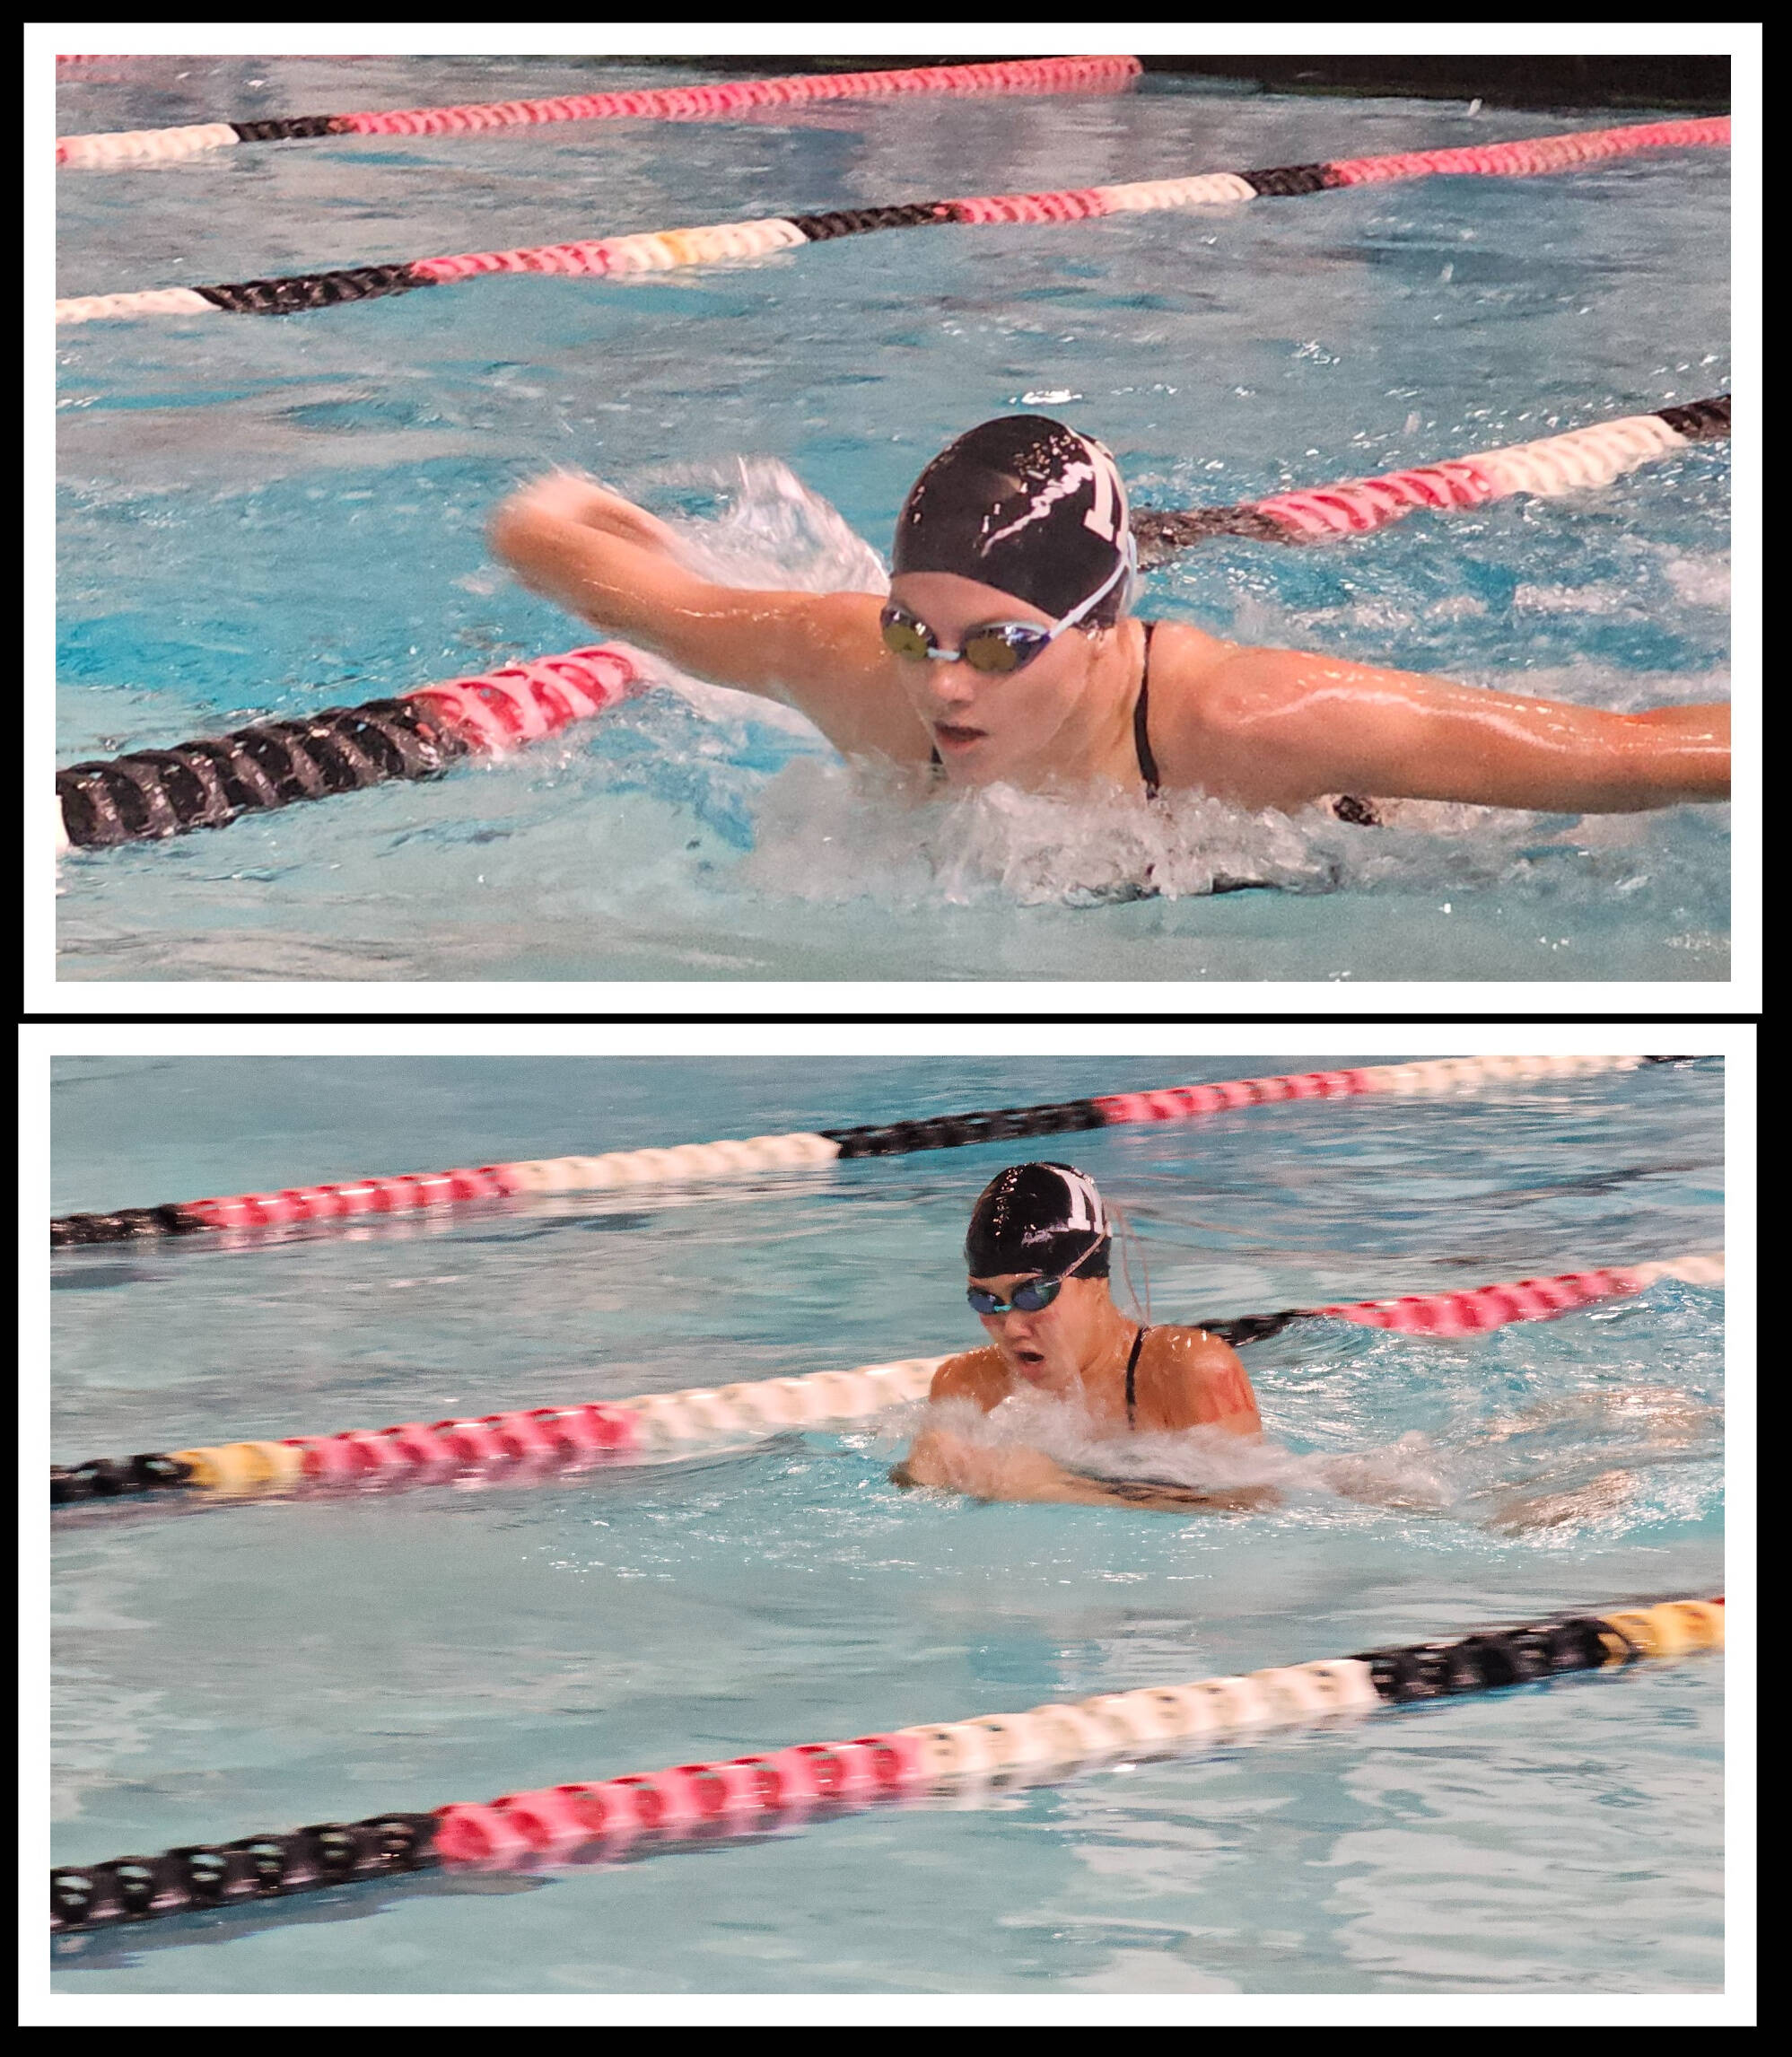 Top, Meg Dahlin blasts through the 100-yard butterfly. Bottom, Rachael Yoo attacks the 100-yard breaststroke. Courtesy photos